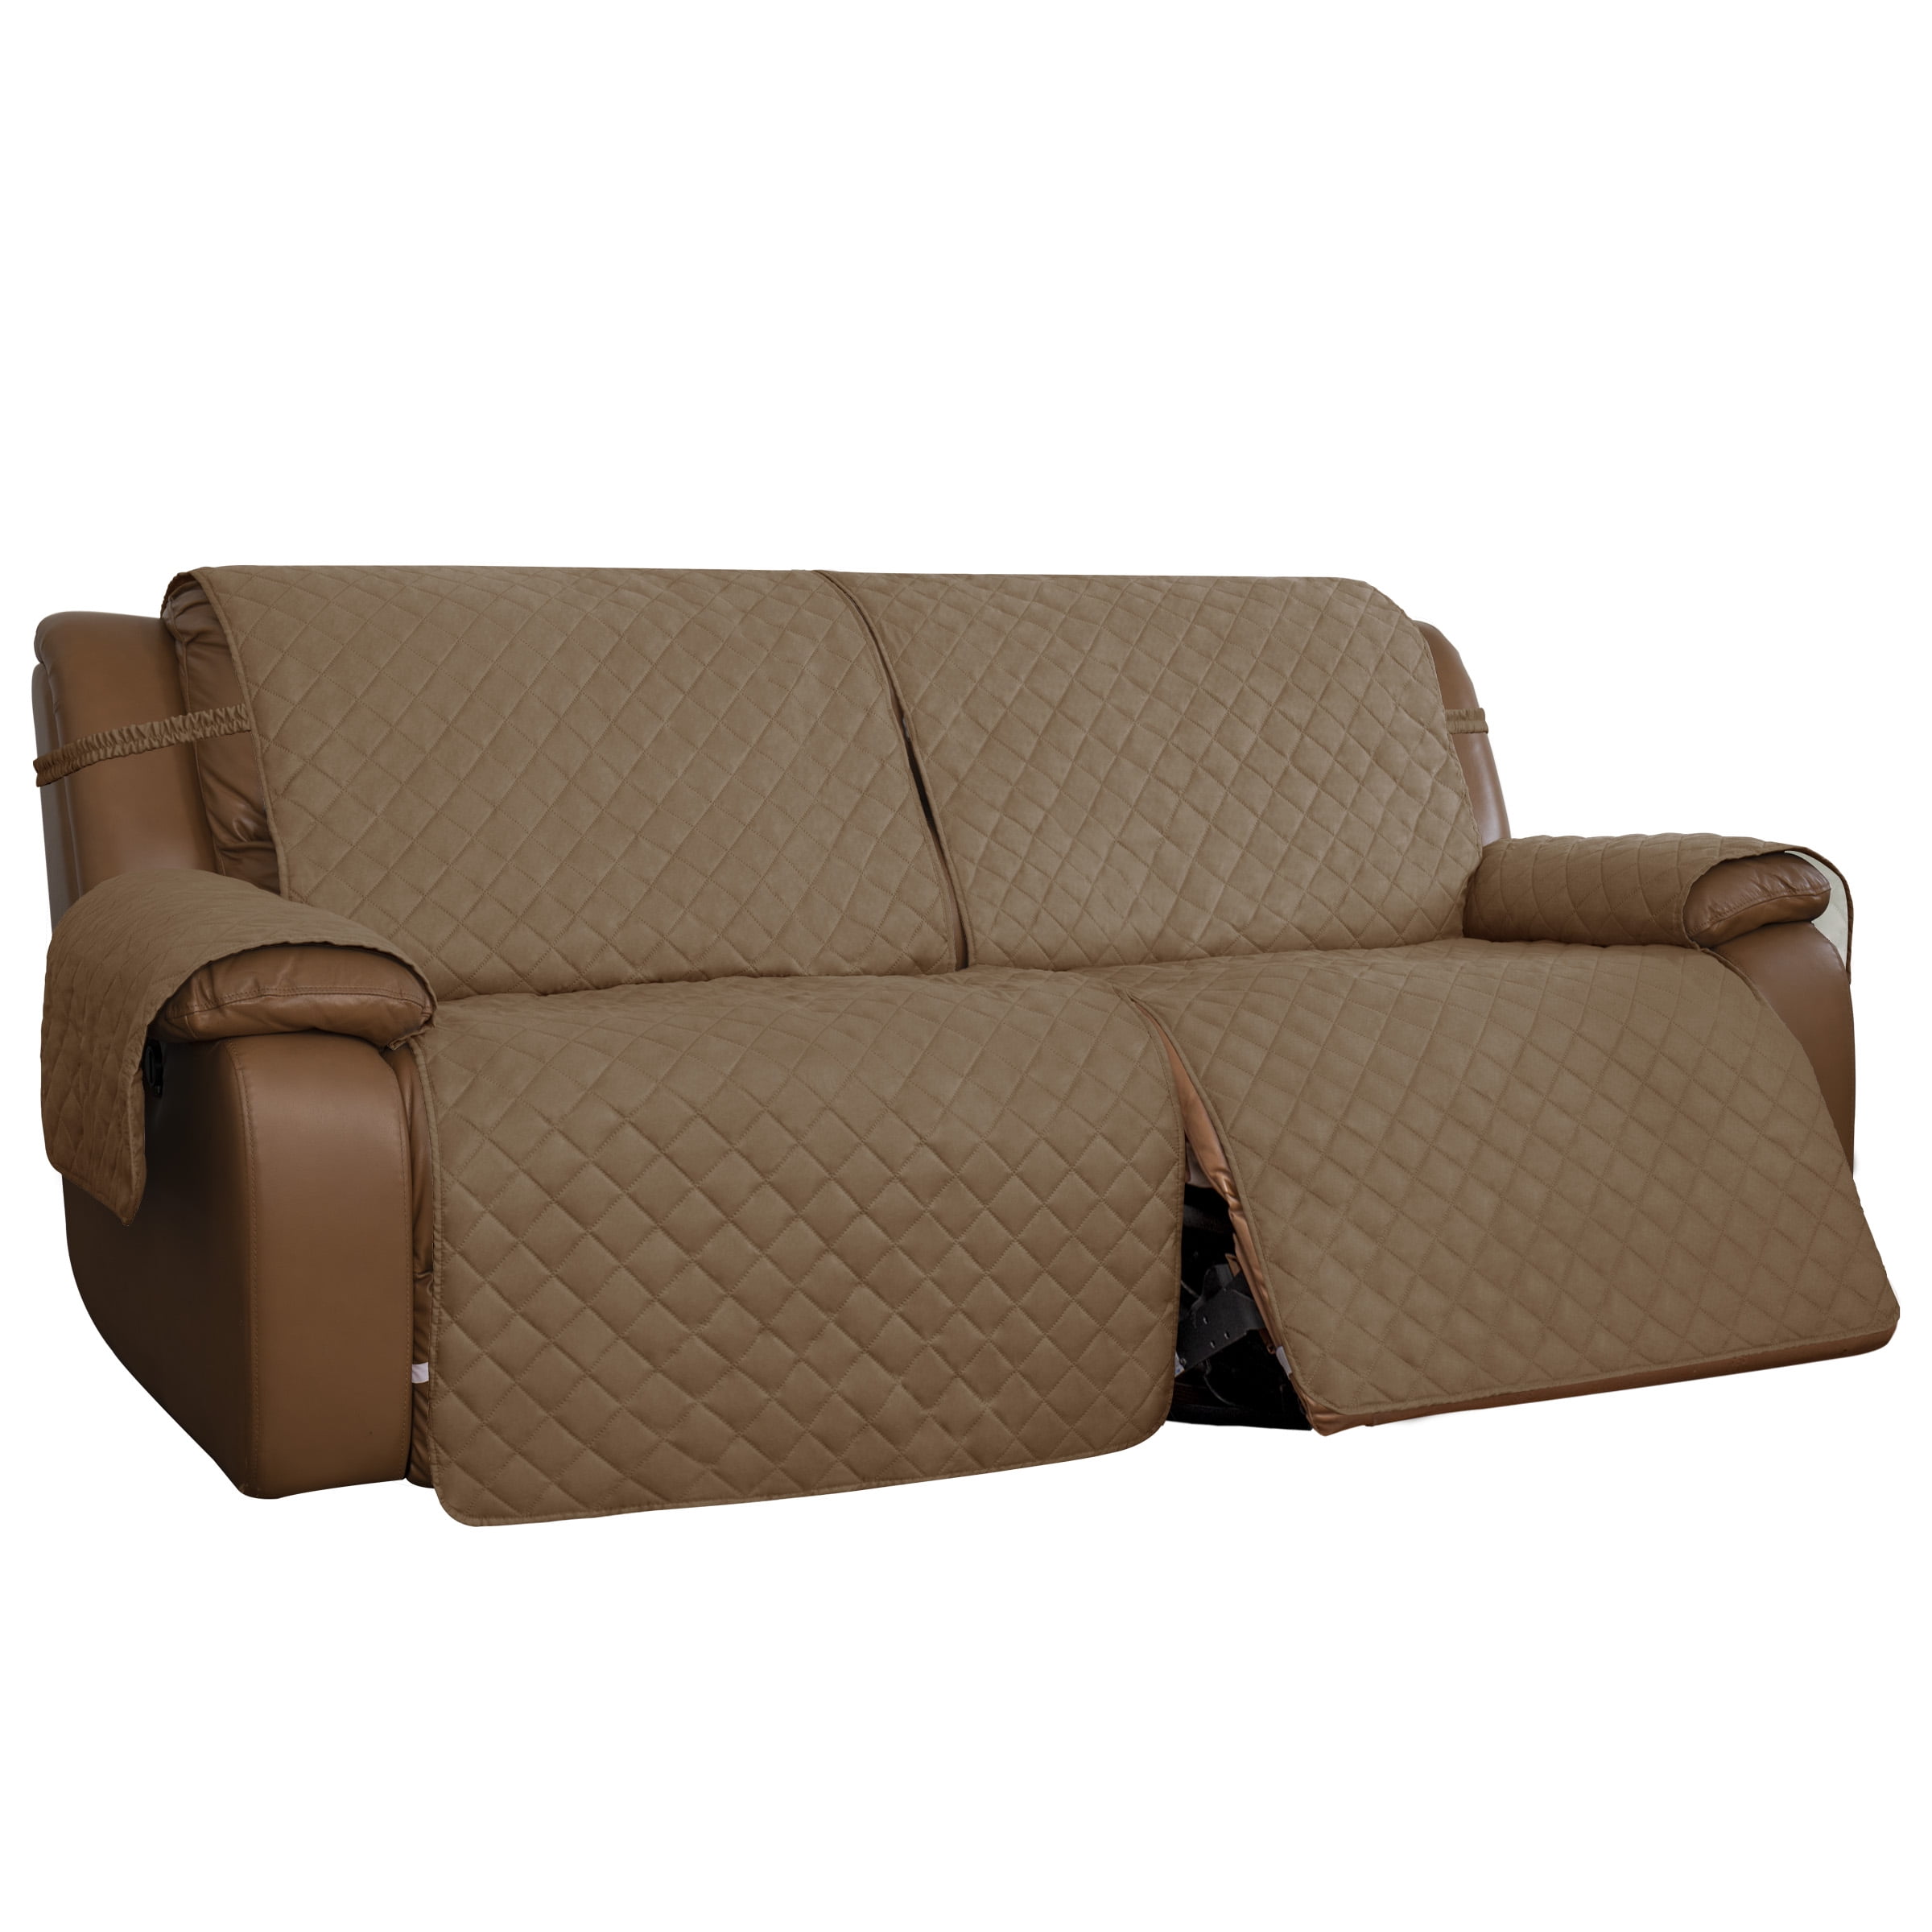 Triple Seater Reversible Sofa Furniture Slip Cover Protector Cream Chocolate 